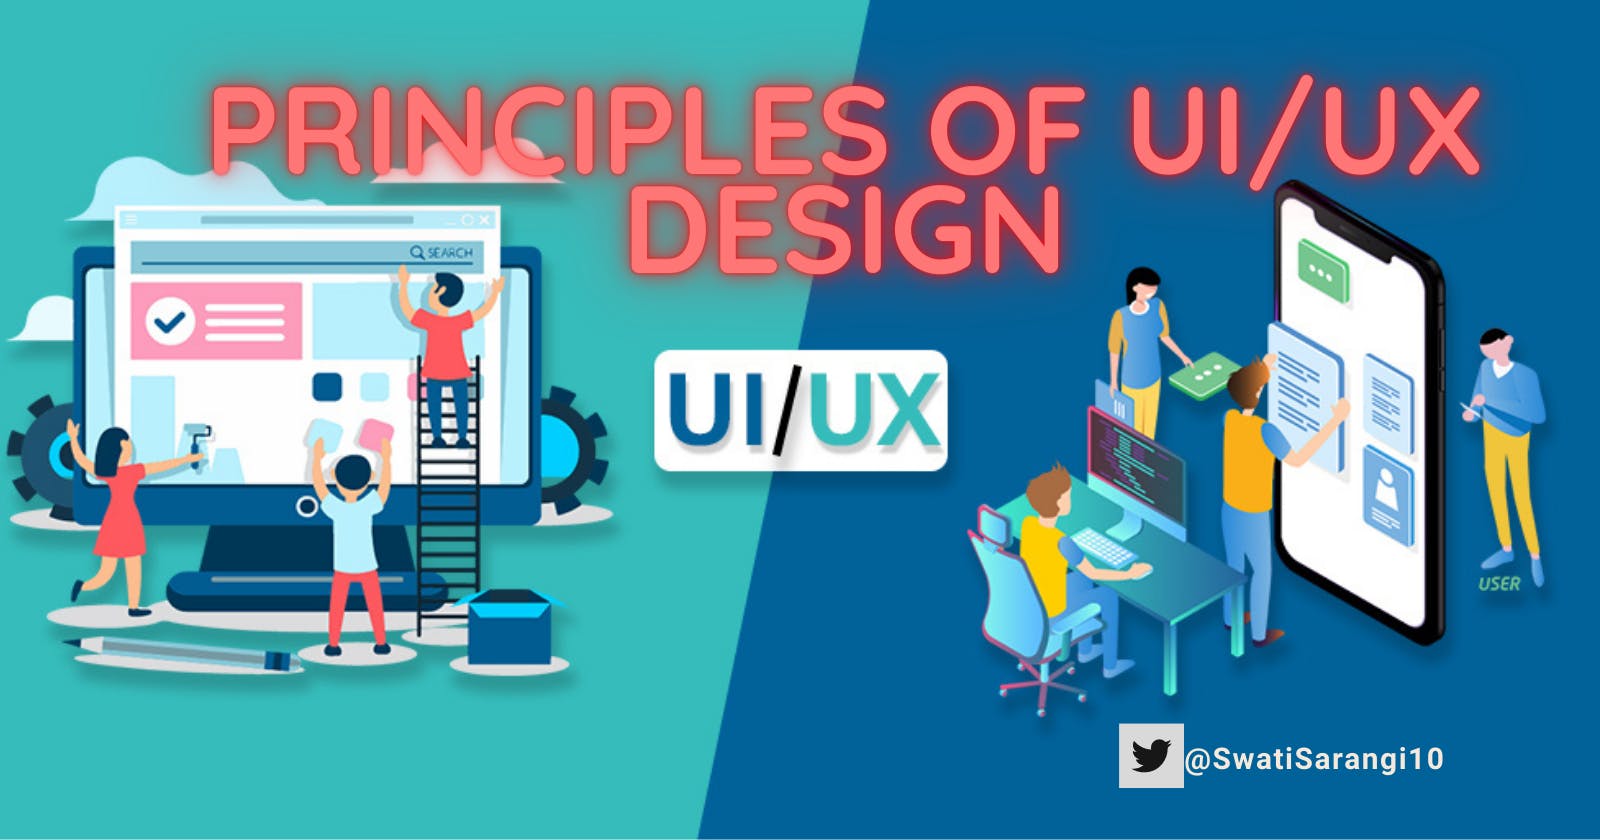 Principles of UI/UX Design